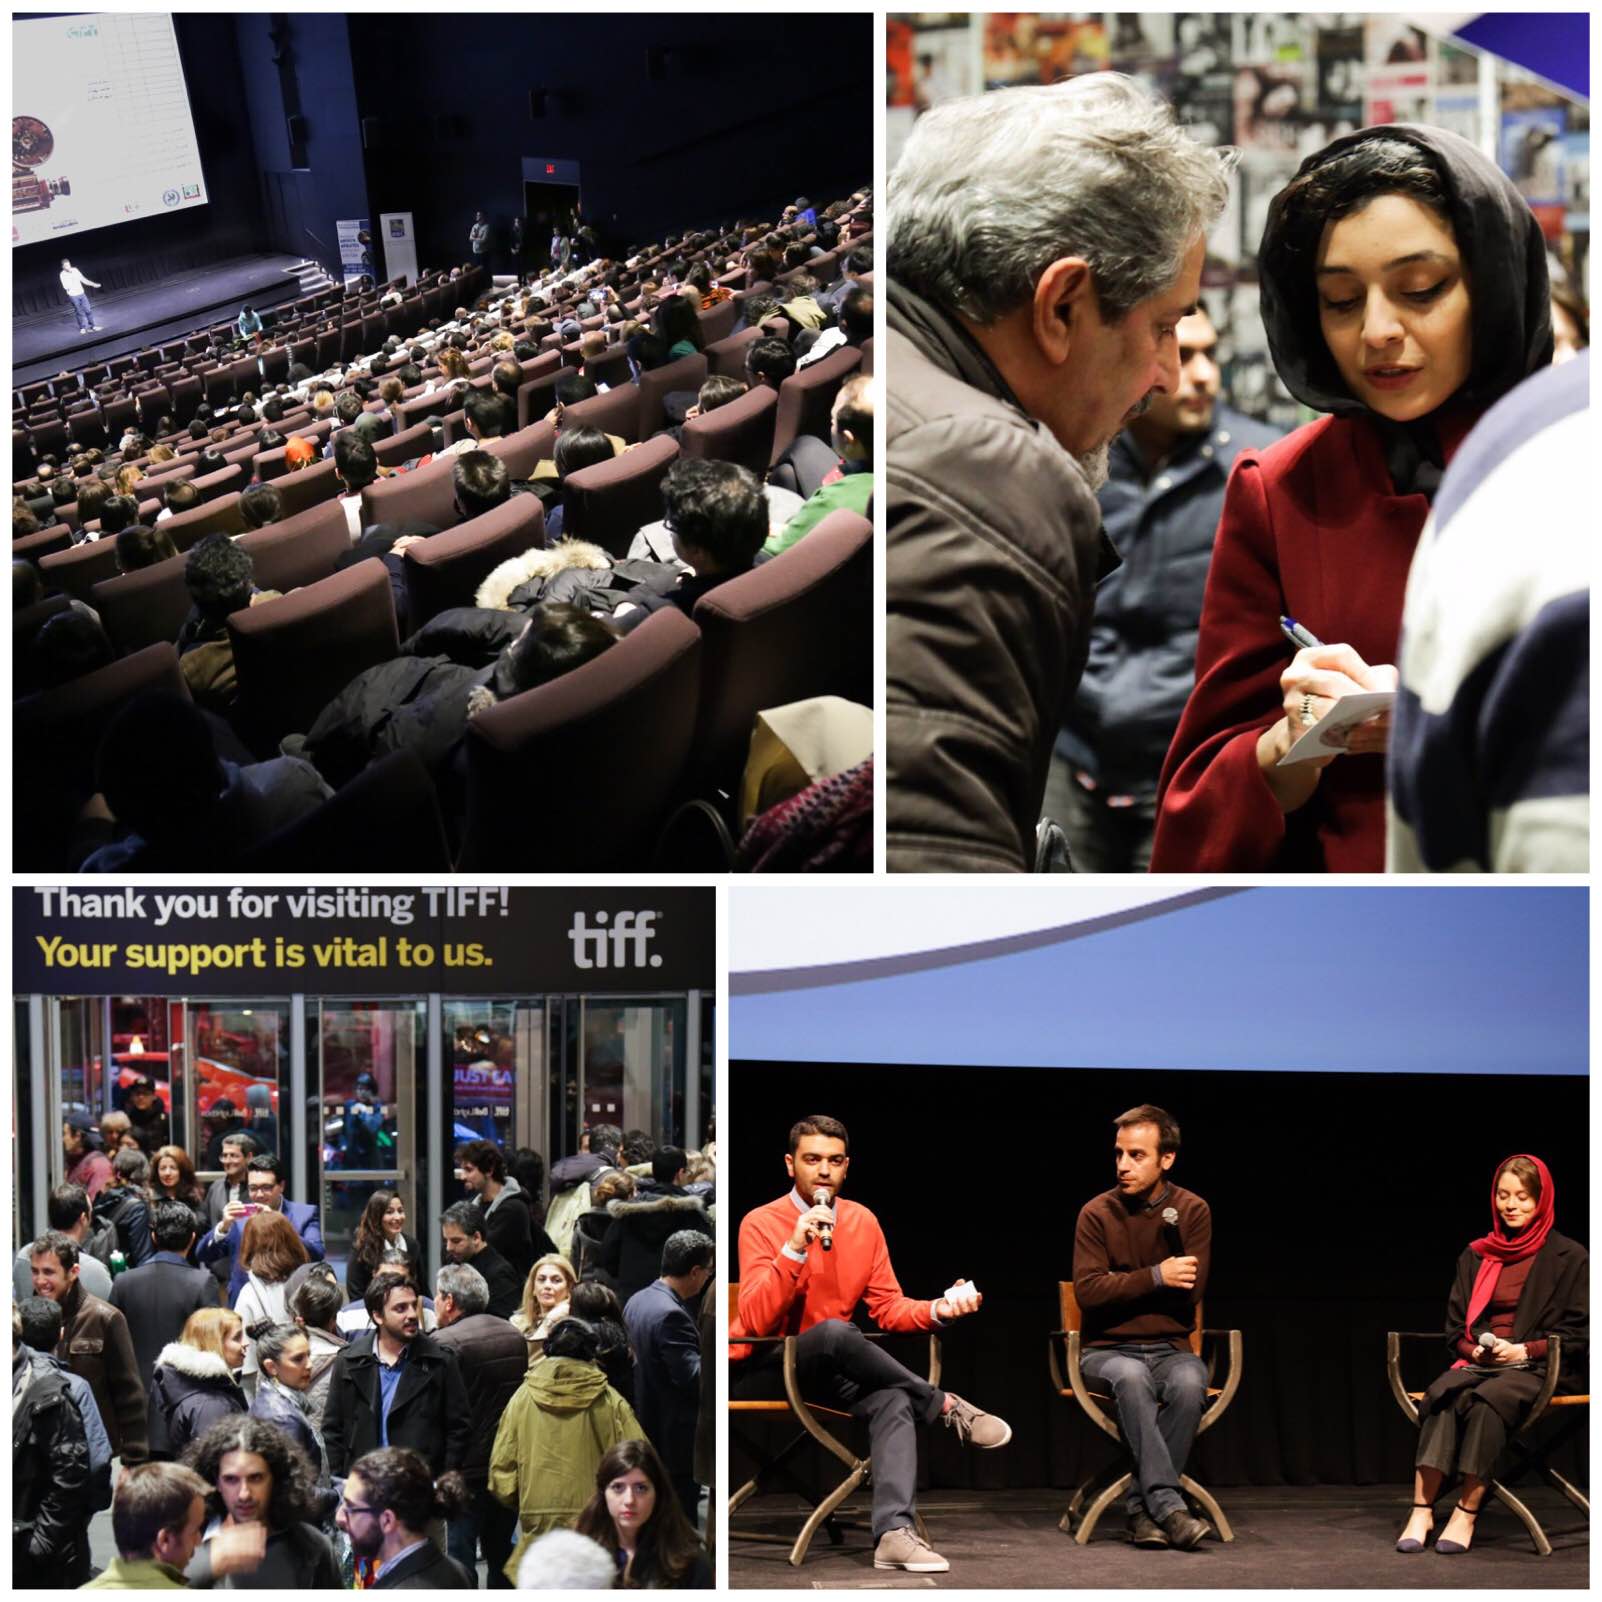 Scenes from CineIran 2015